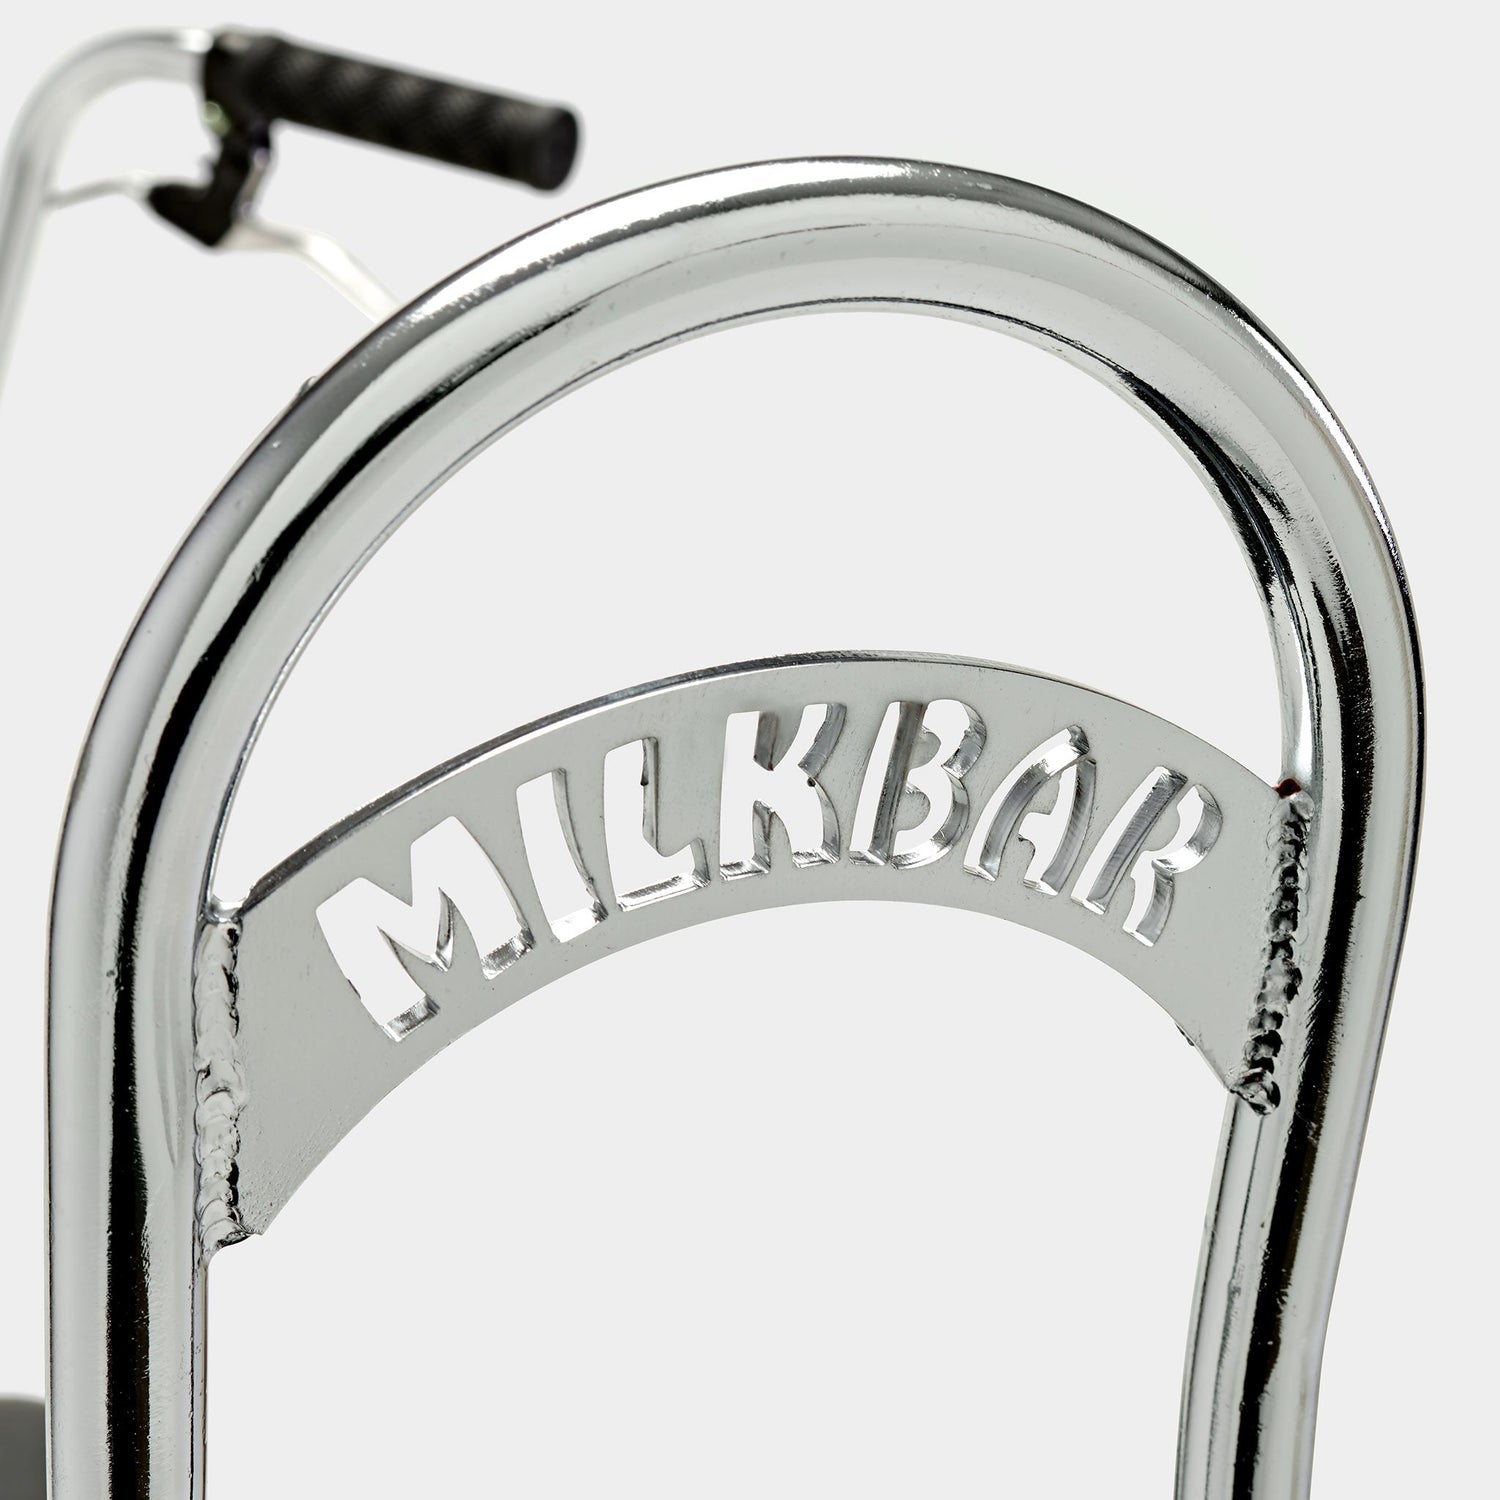 Back bar detailing of the Milkbar Bikes Sugar High 26" - Icy Chrome